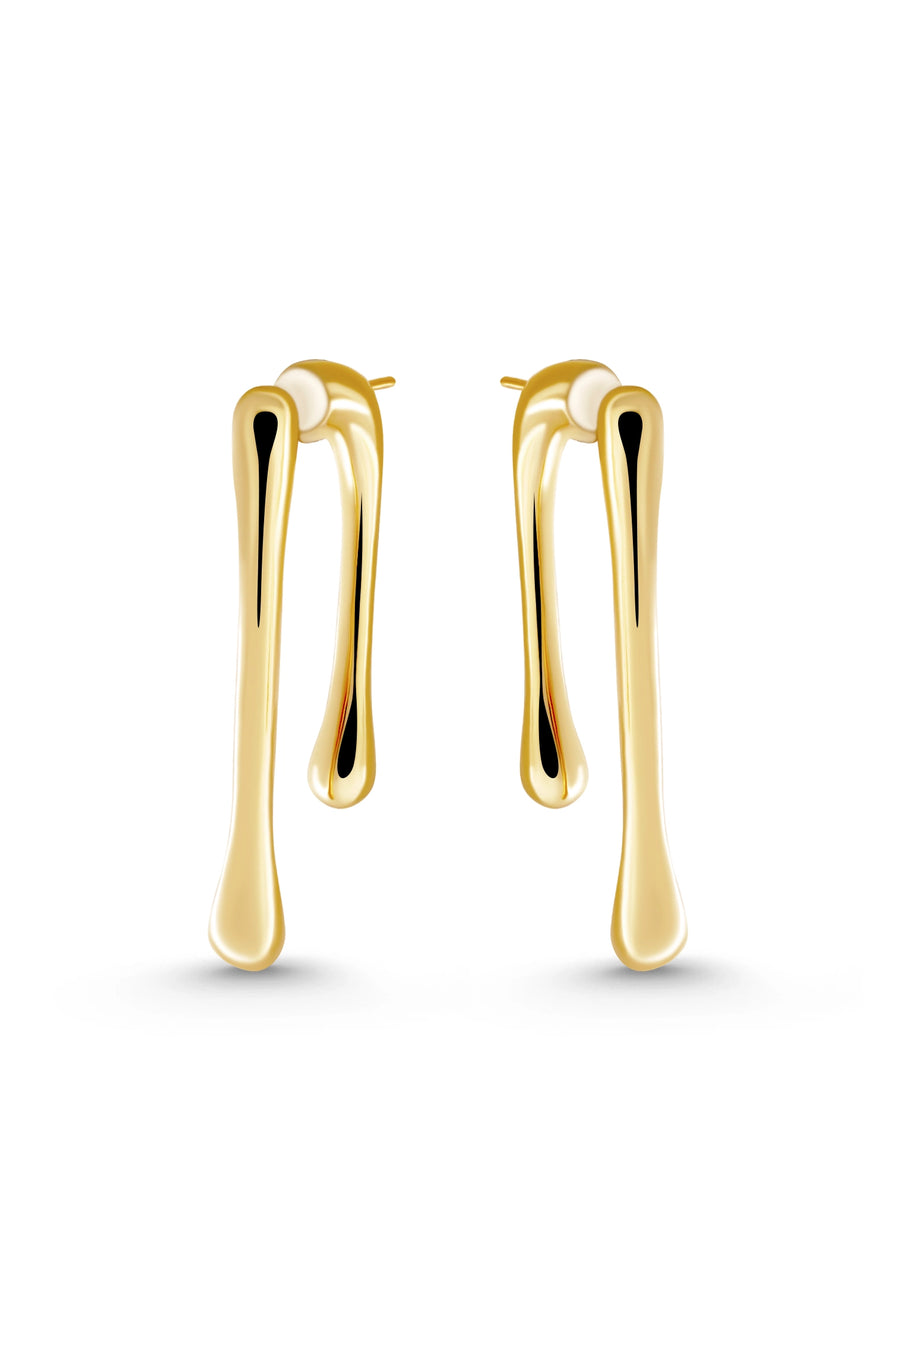 LITHE Earrings. Asymmetrical melt flow drop earrings, 18K gold vermeil, handmade, hypoallergenic, water-resistant